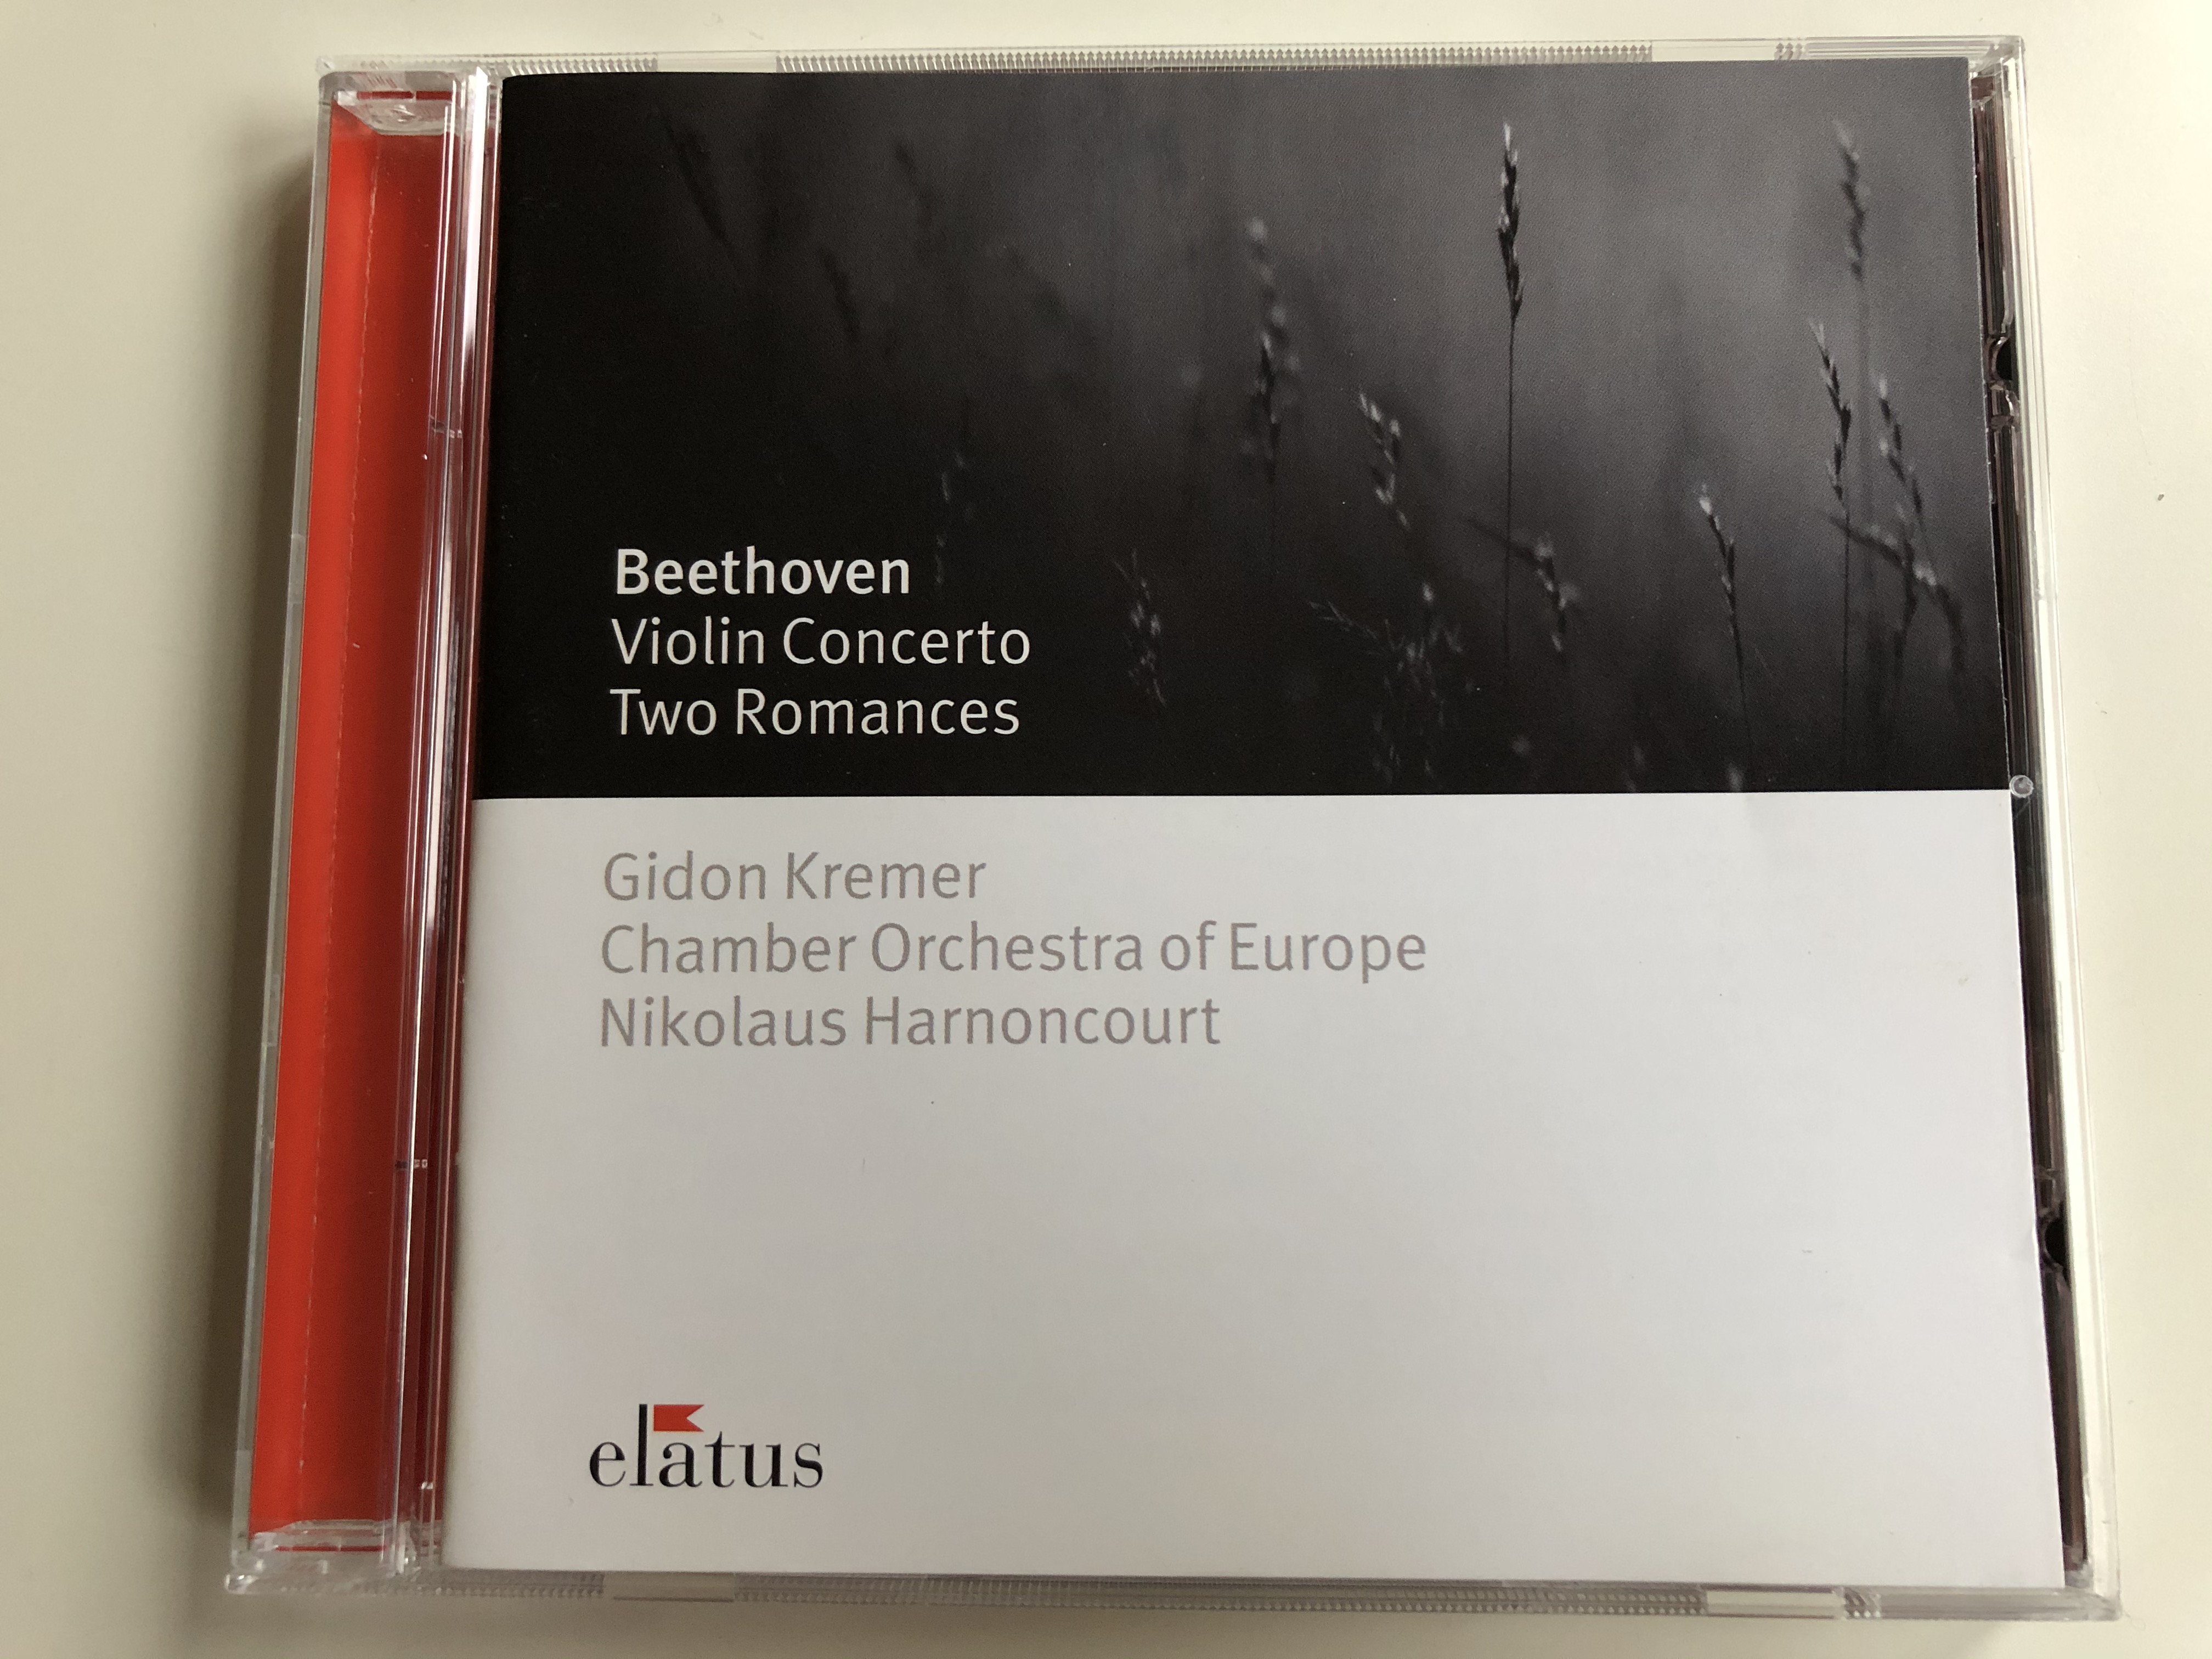 beethoven-violin-concerto-two-romances-gidon-kremer-chamber-orchestra-of-europe-nikolaus-harnoncourt-elatus-audio-cd-2003-0927-49773-2-1-.jpg